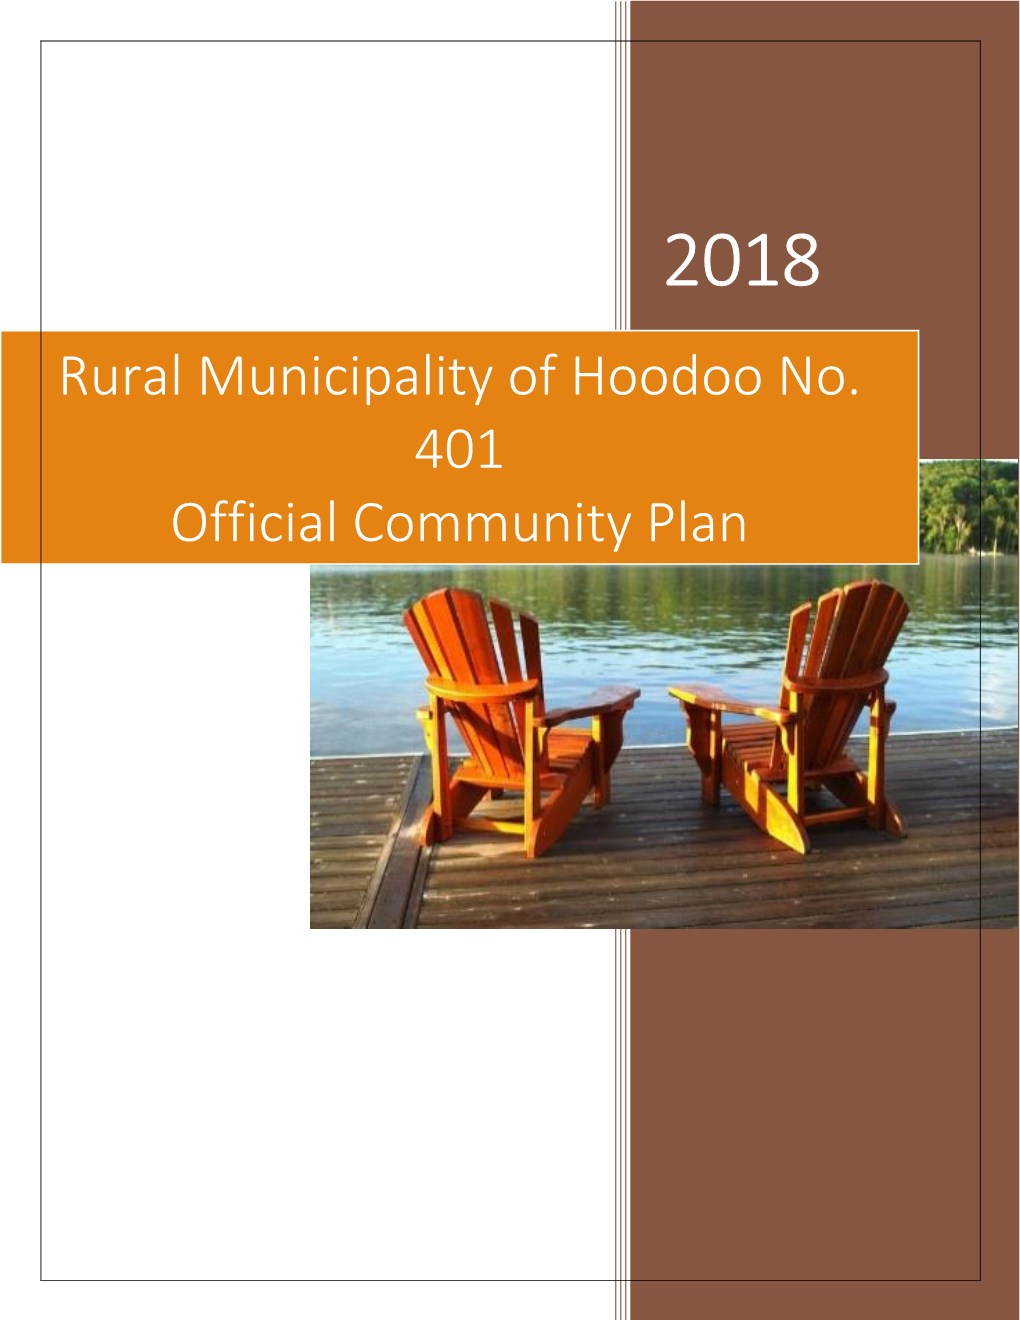 Rural Municipality of Hoodoo No. 401 Official Community Plan